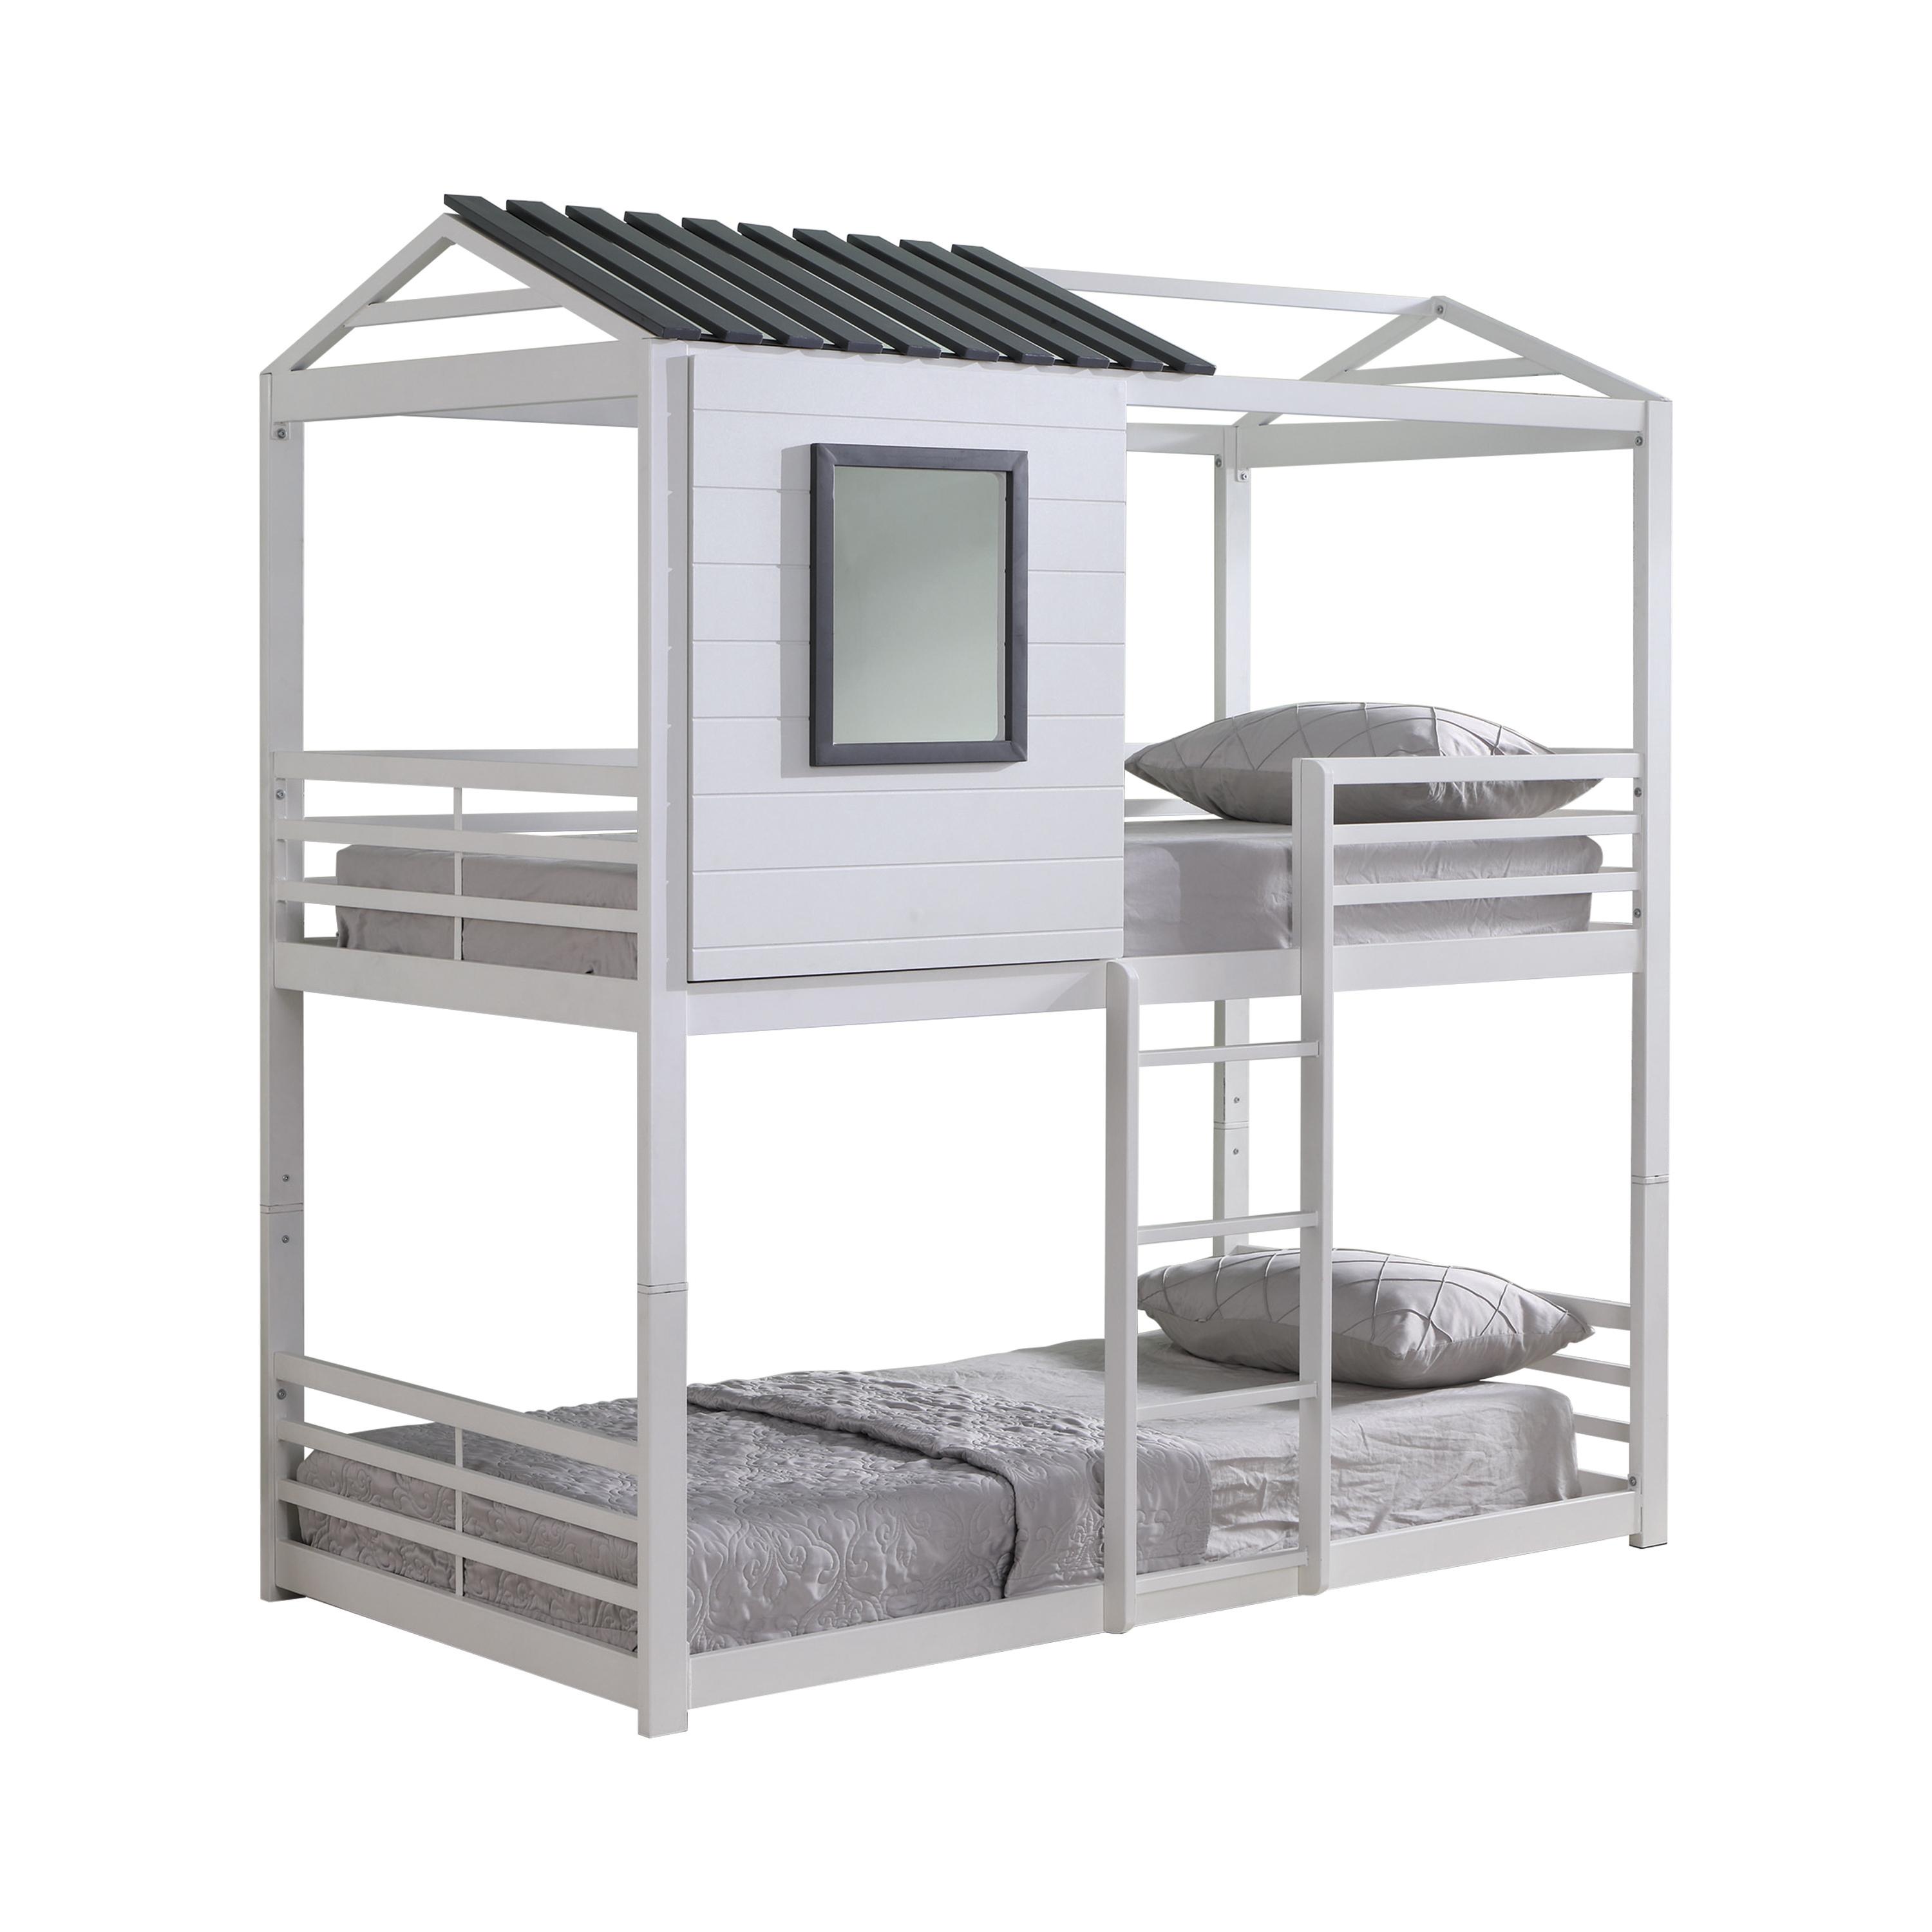 Modern Bunk Bed 461161 Belton 461161 in White, Gray 